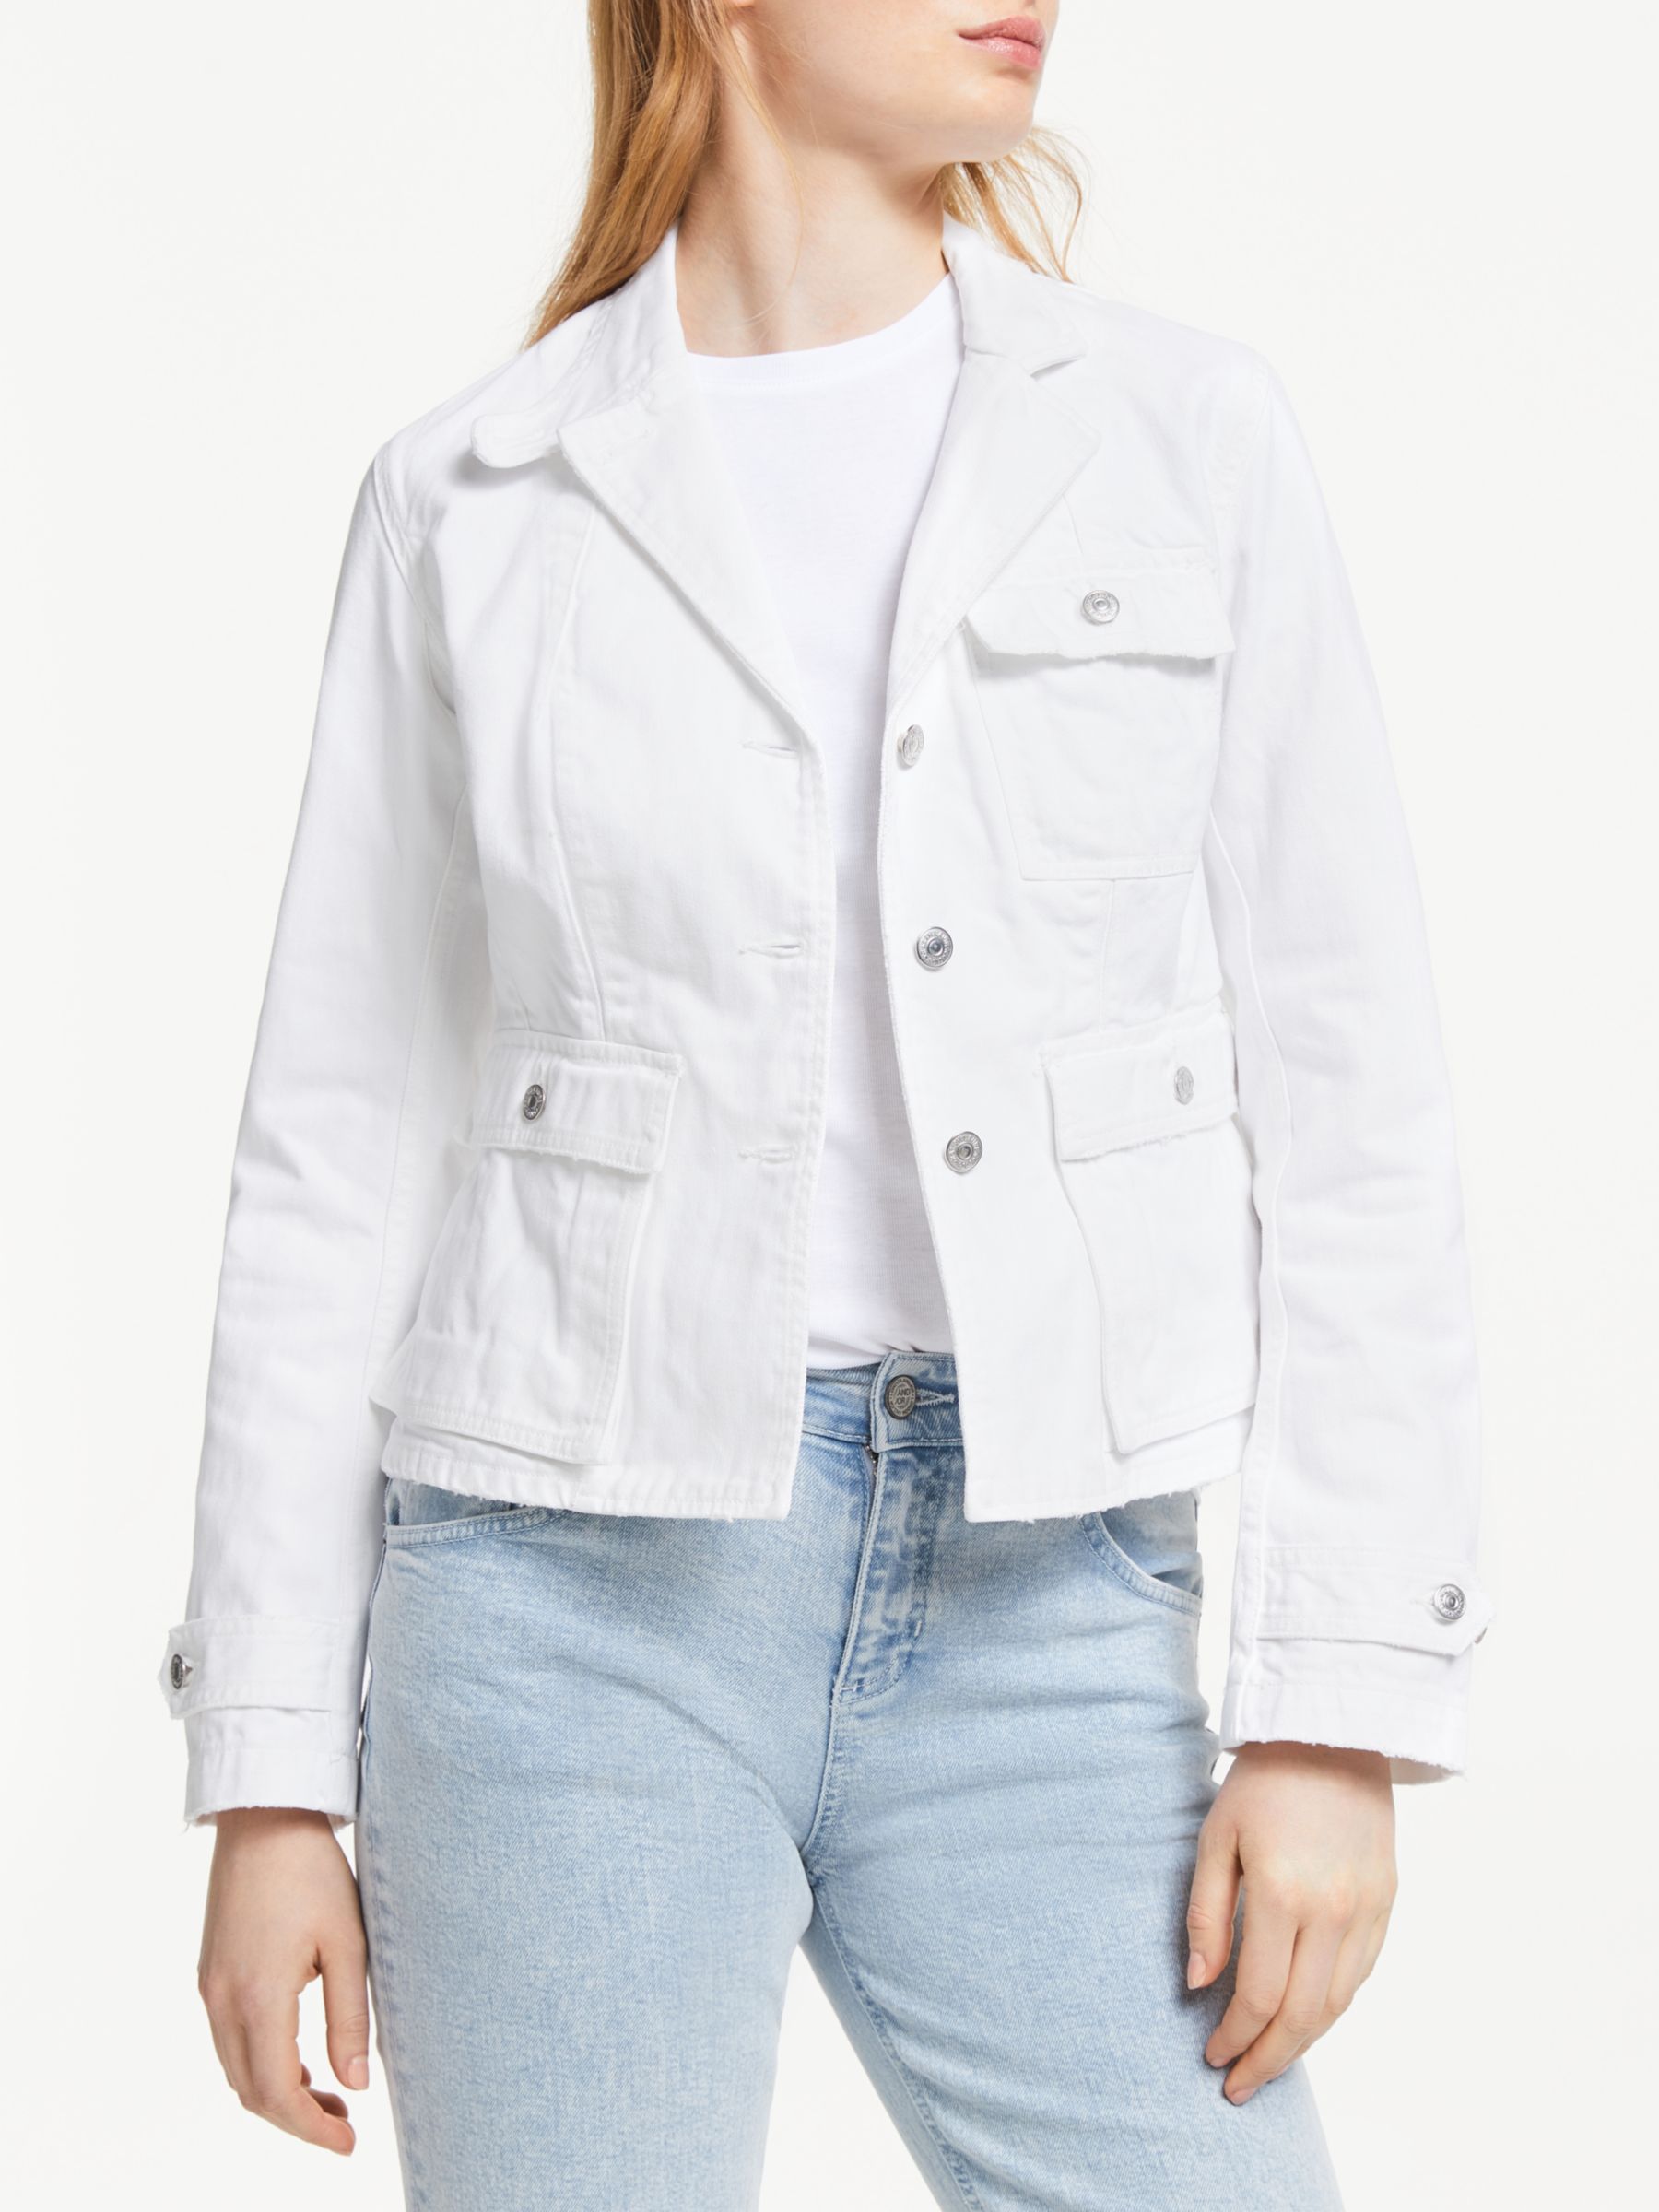 polo ralph lauren white jacket